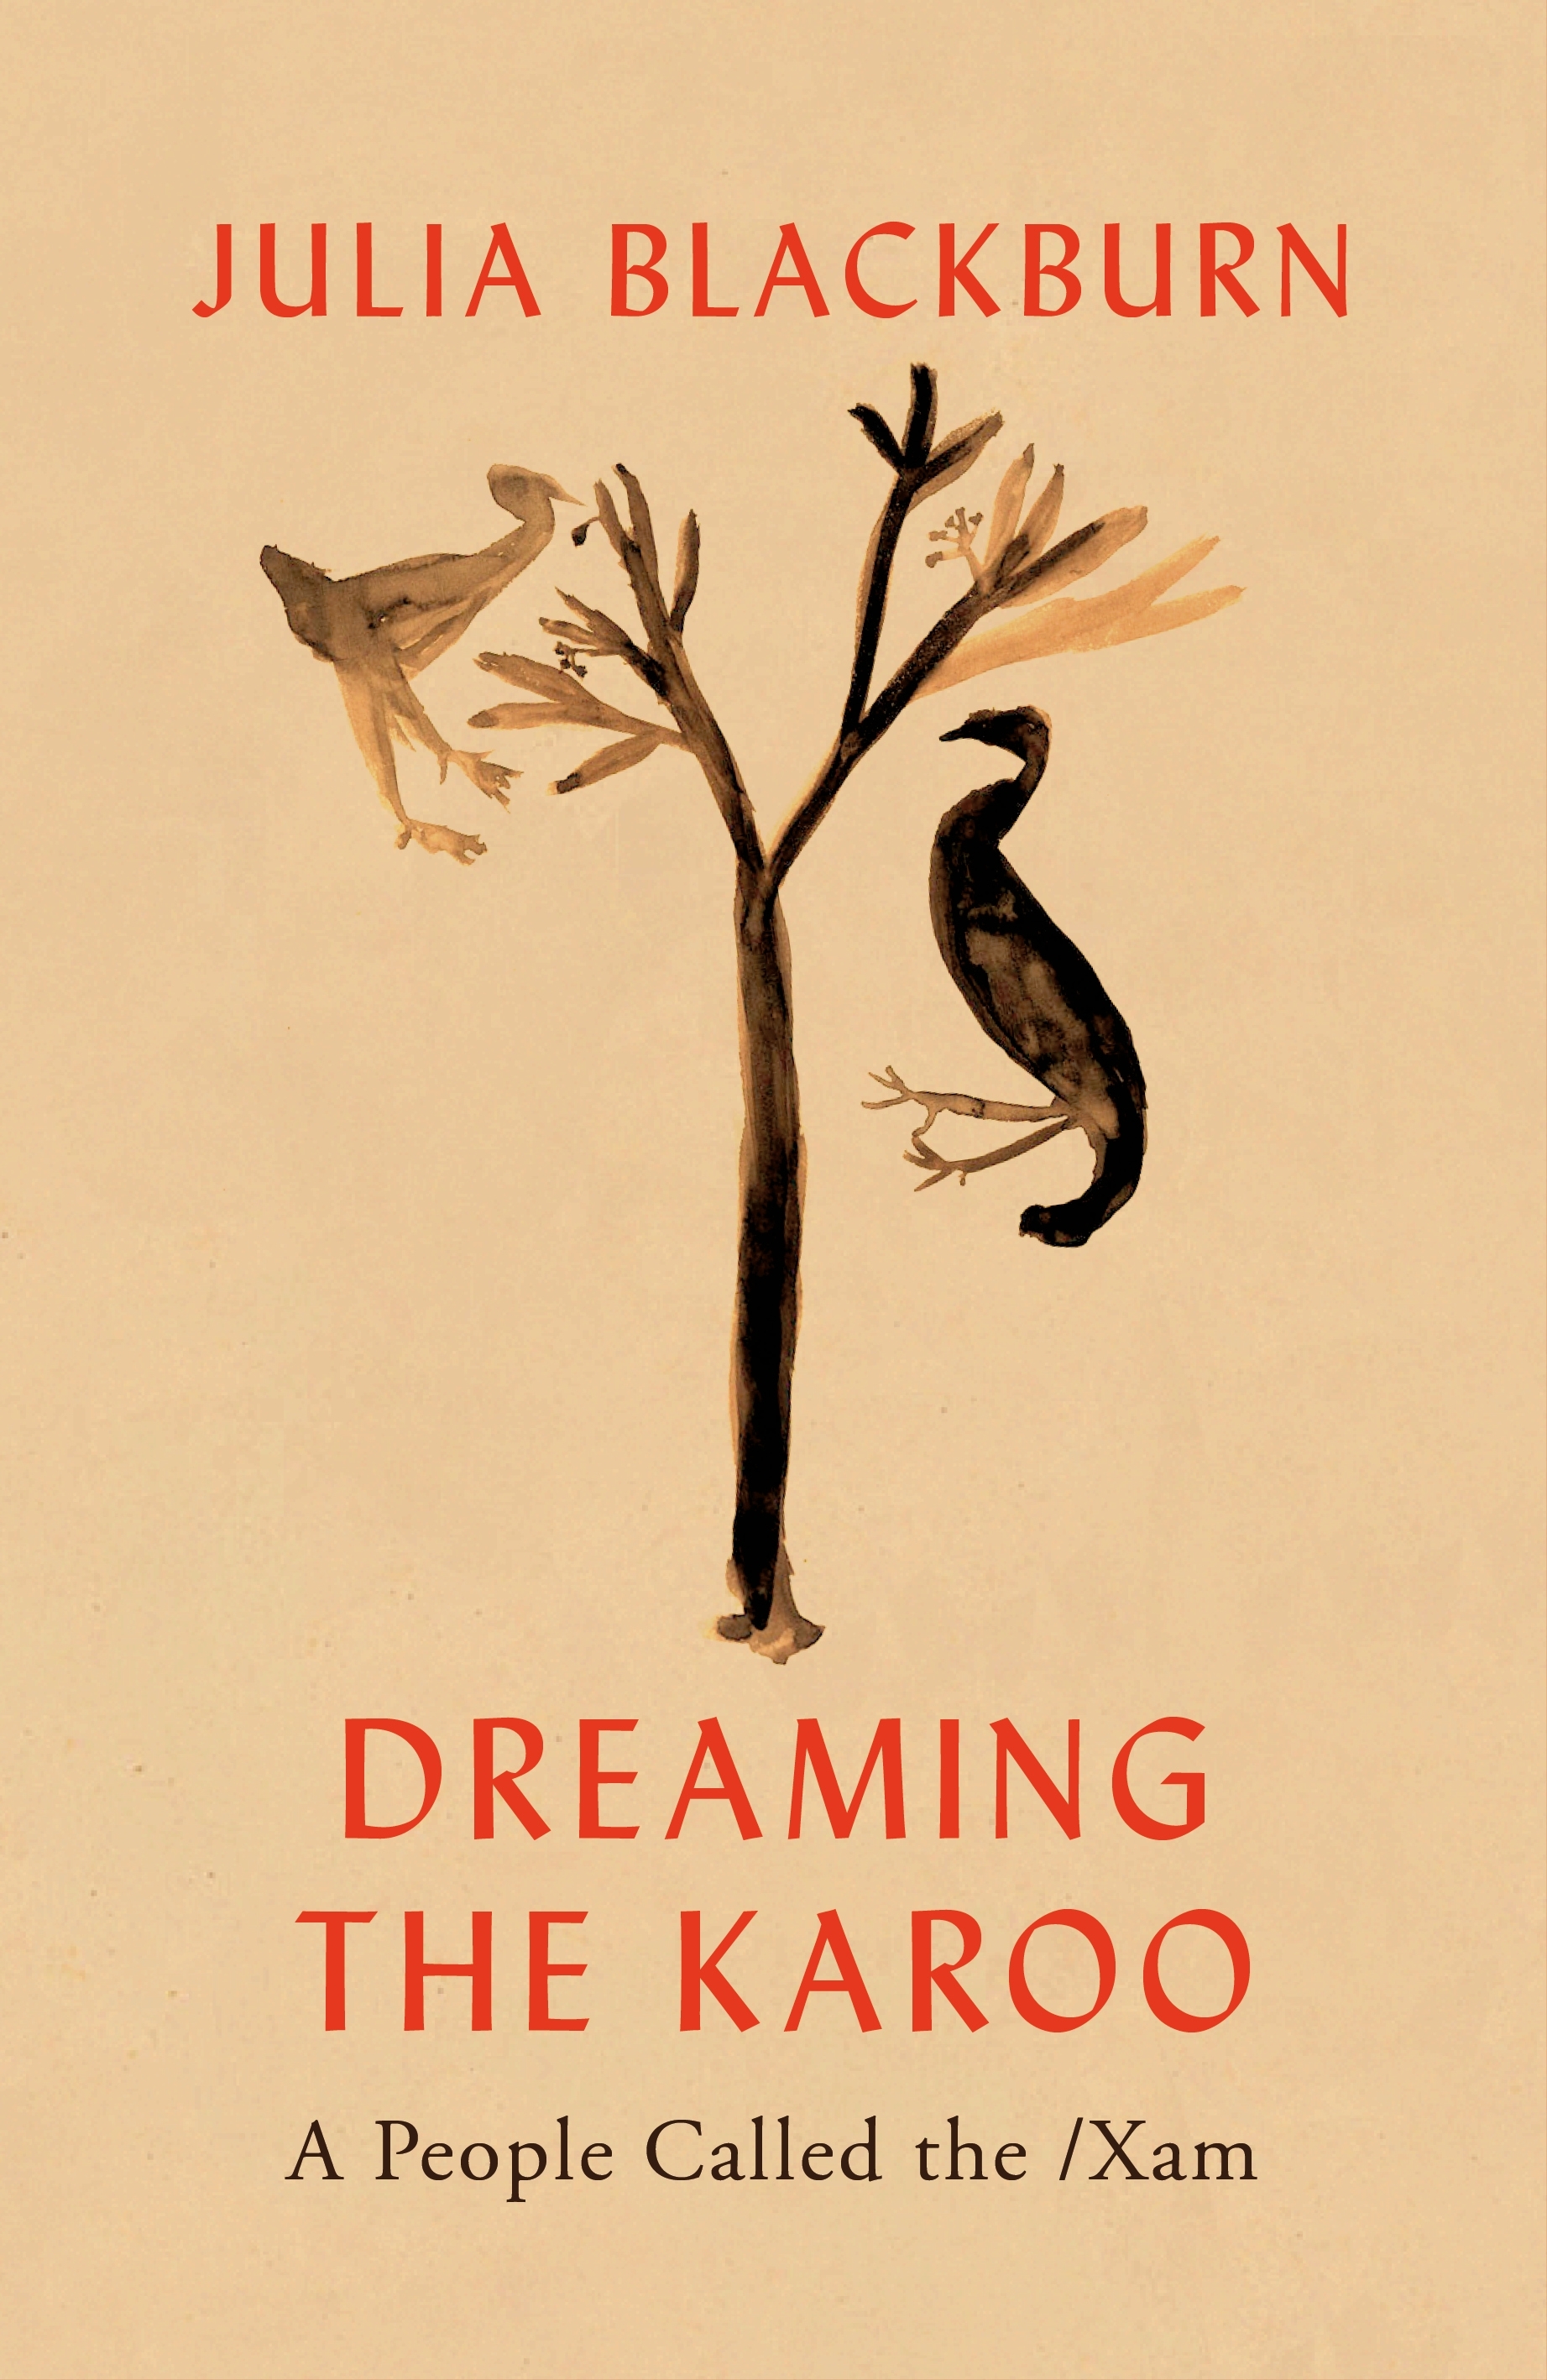 Dreaming the Karoo by Julia Blackburn - Penguin Books New Zealand